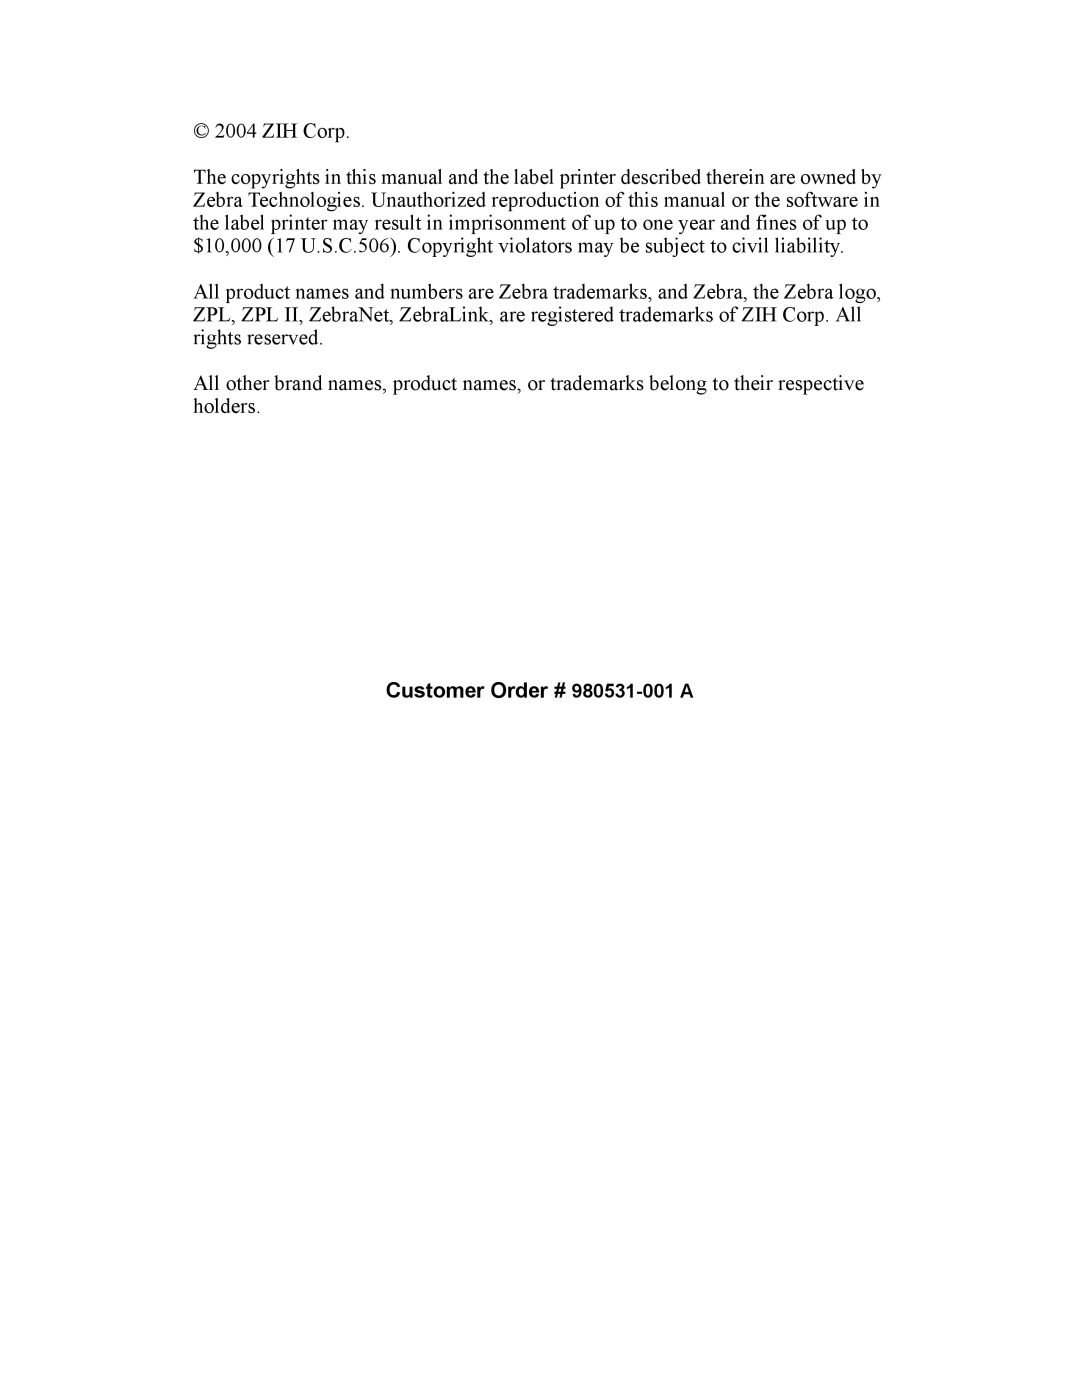 Zebra Technologies H 2824-Z user manual Customer Order # 980531-001 a 